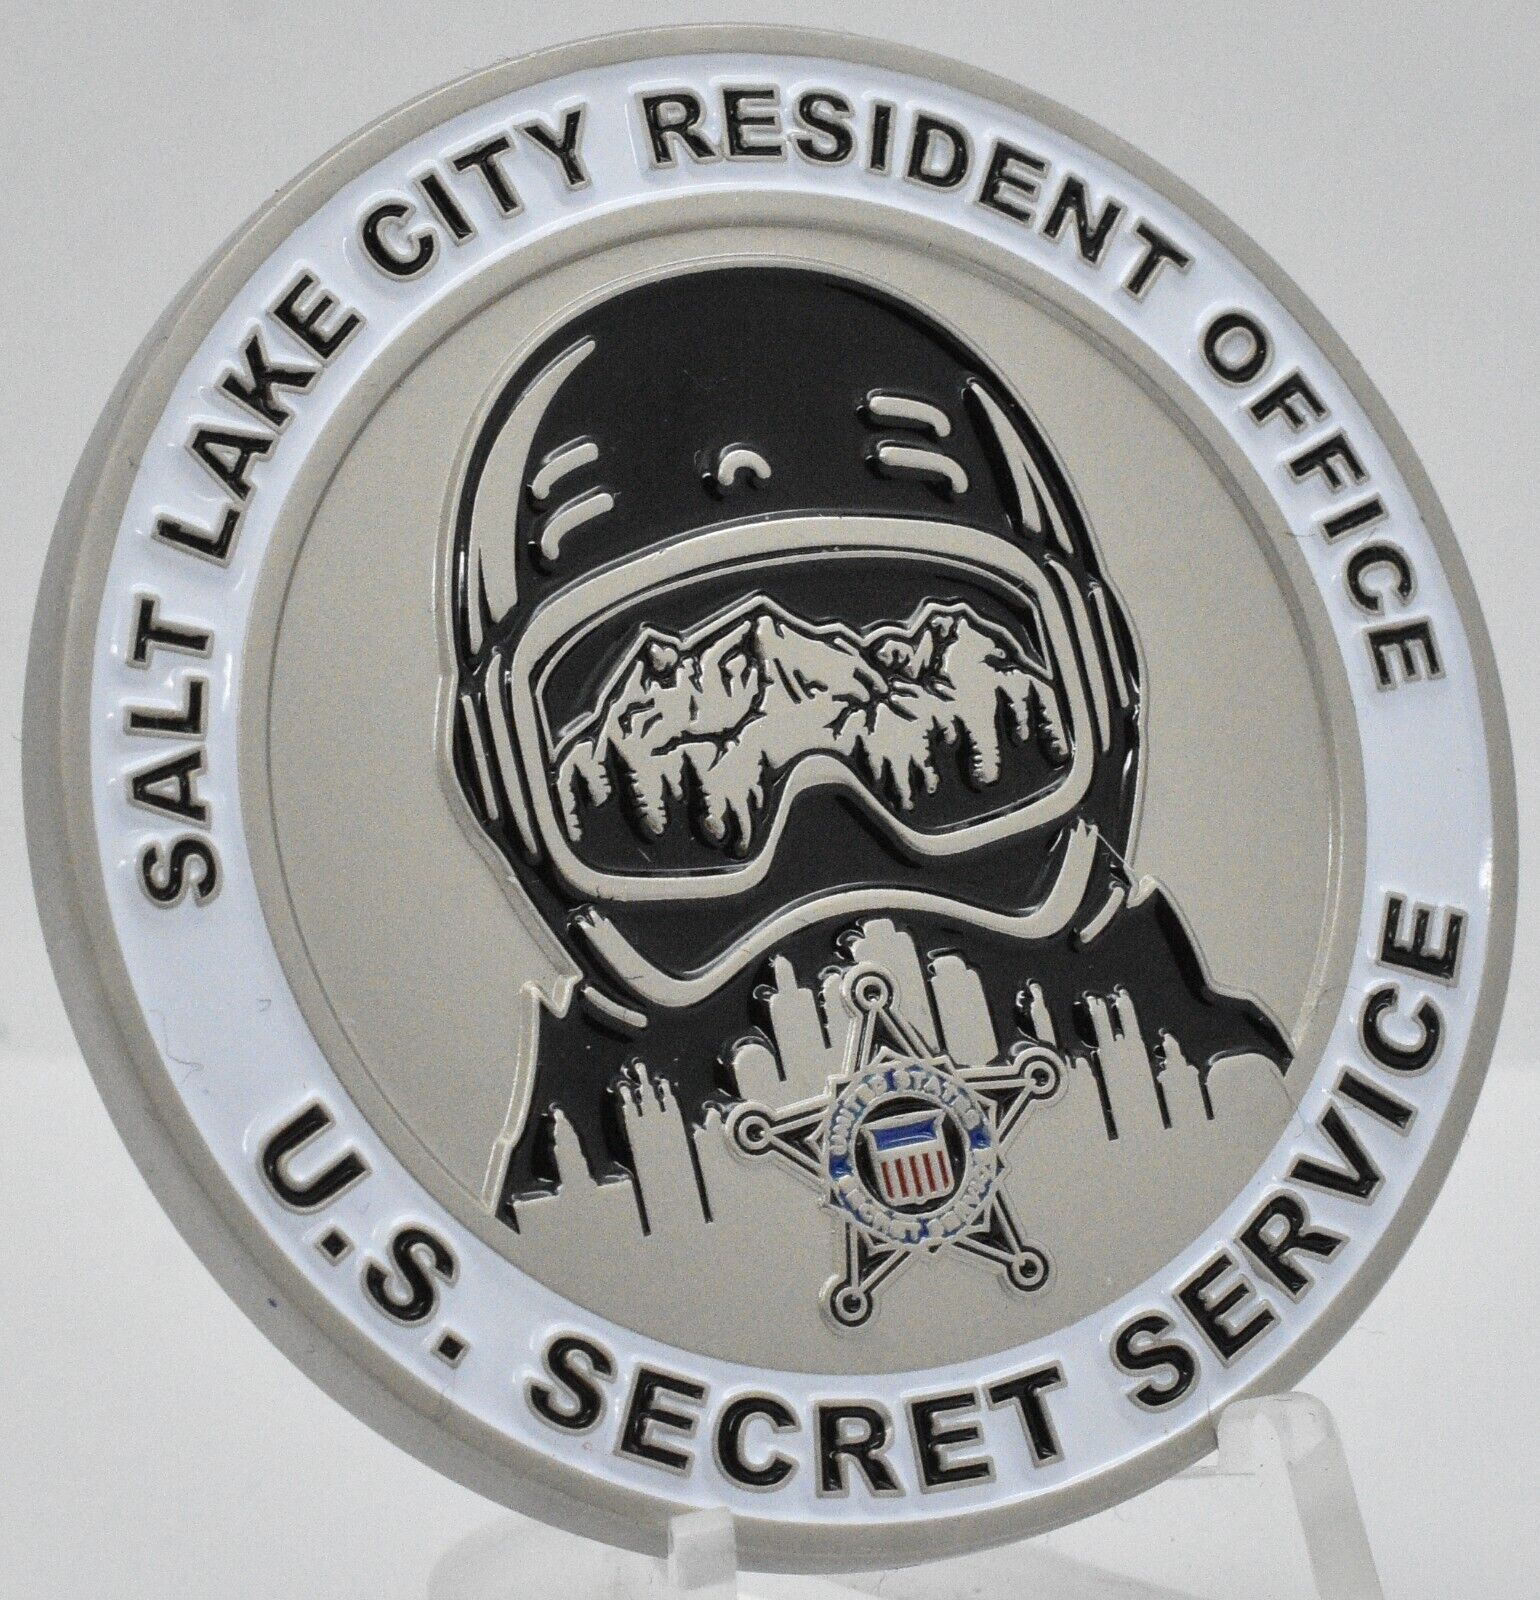 Secret Service Salt Lake City Resident Office New Version Challenge Coin